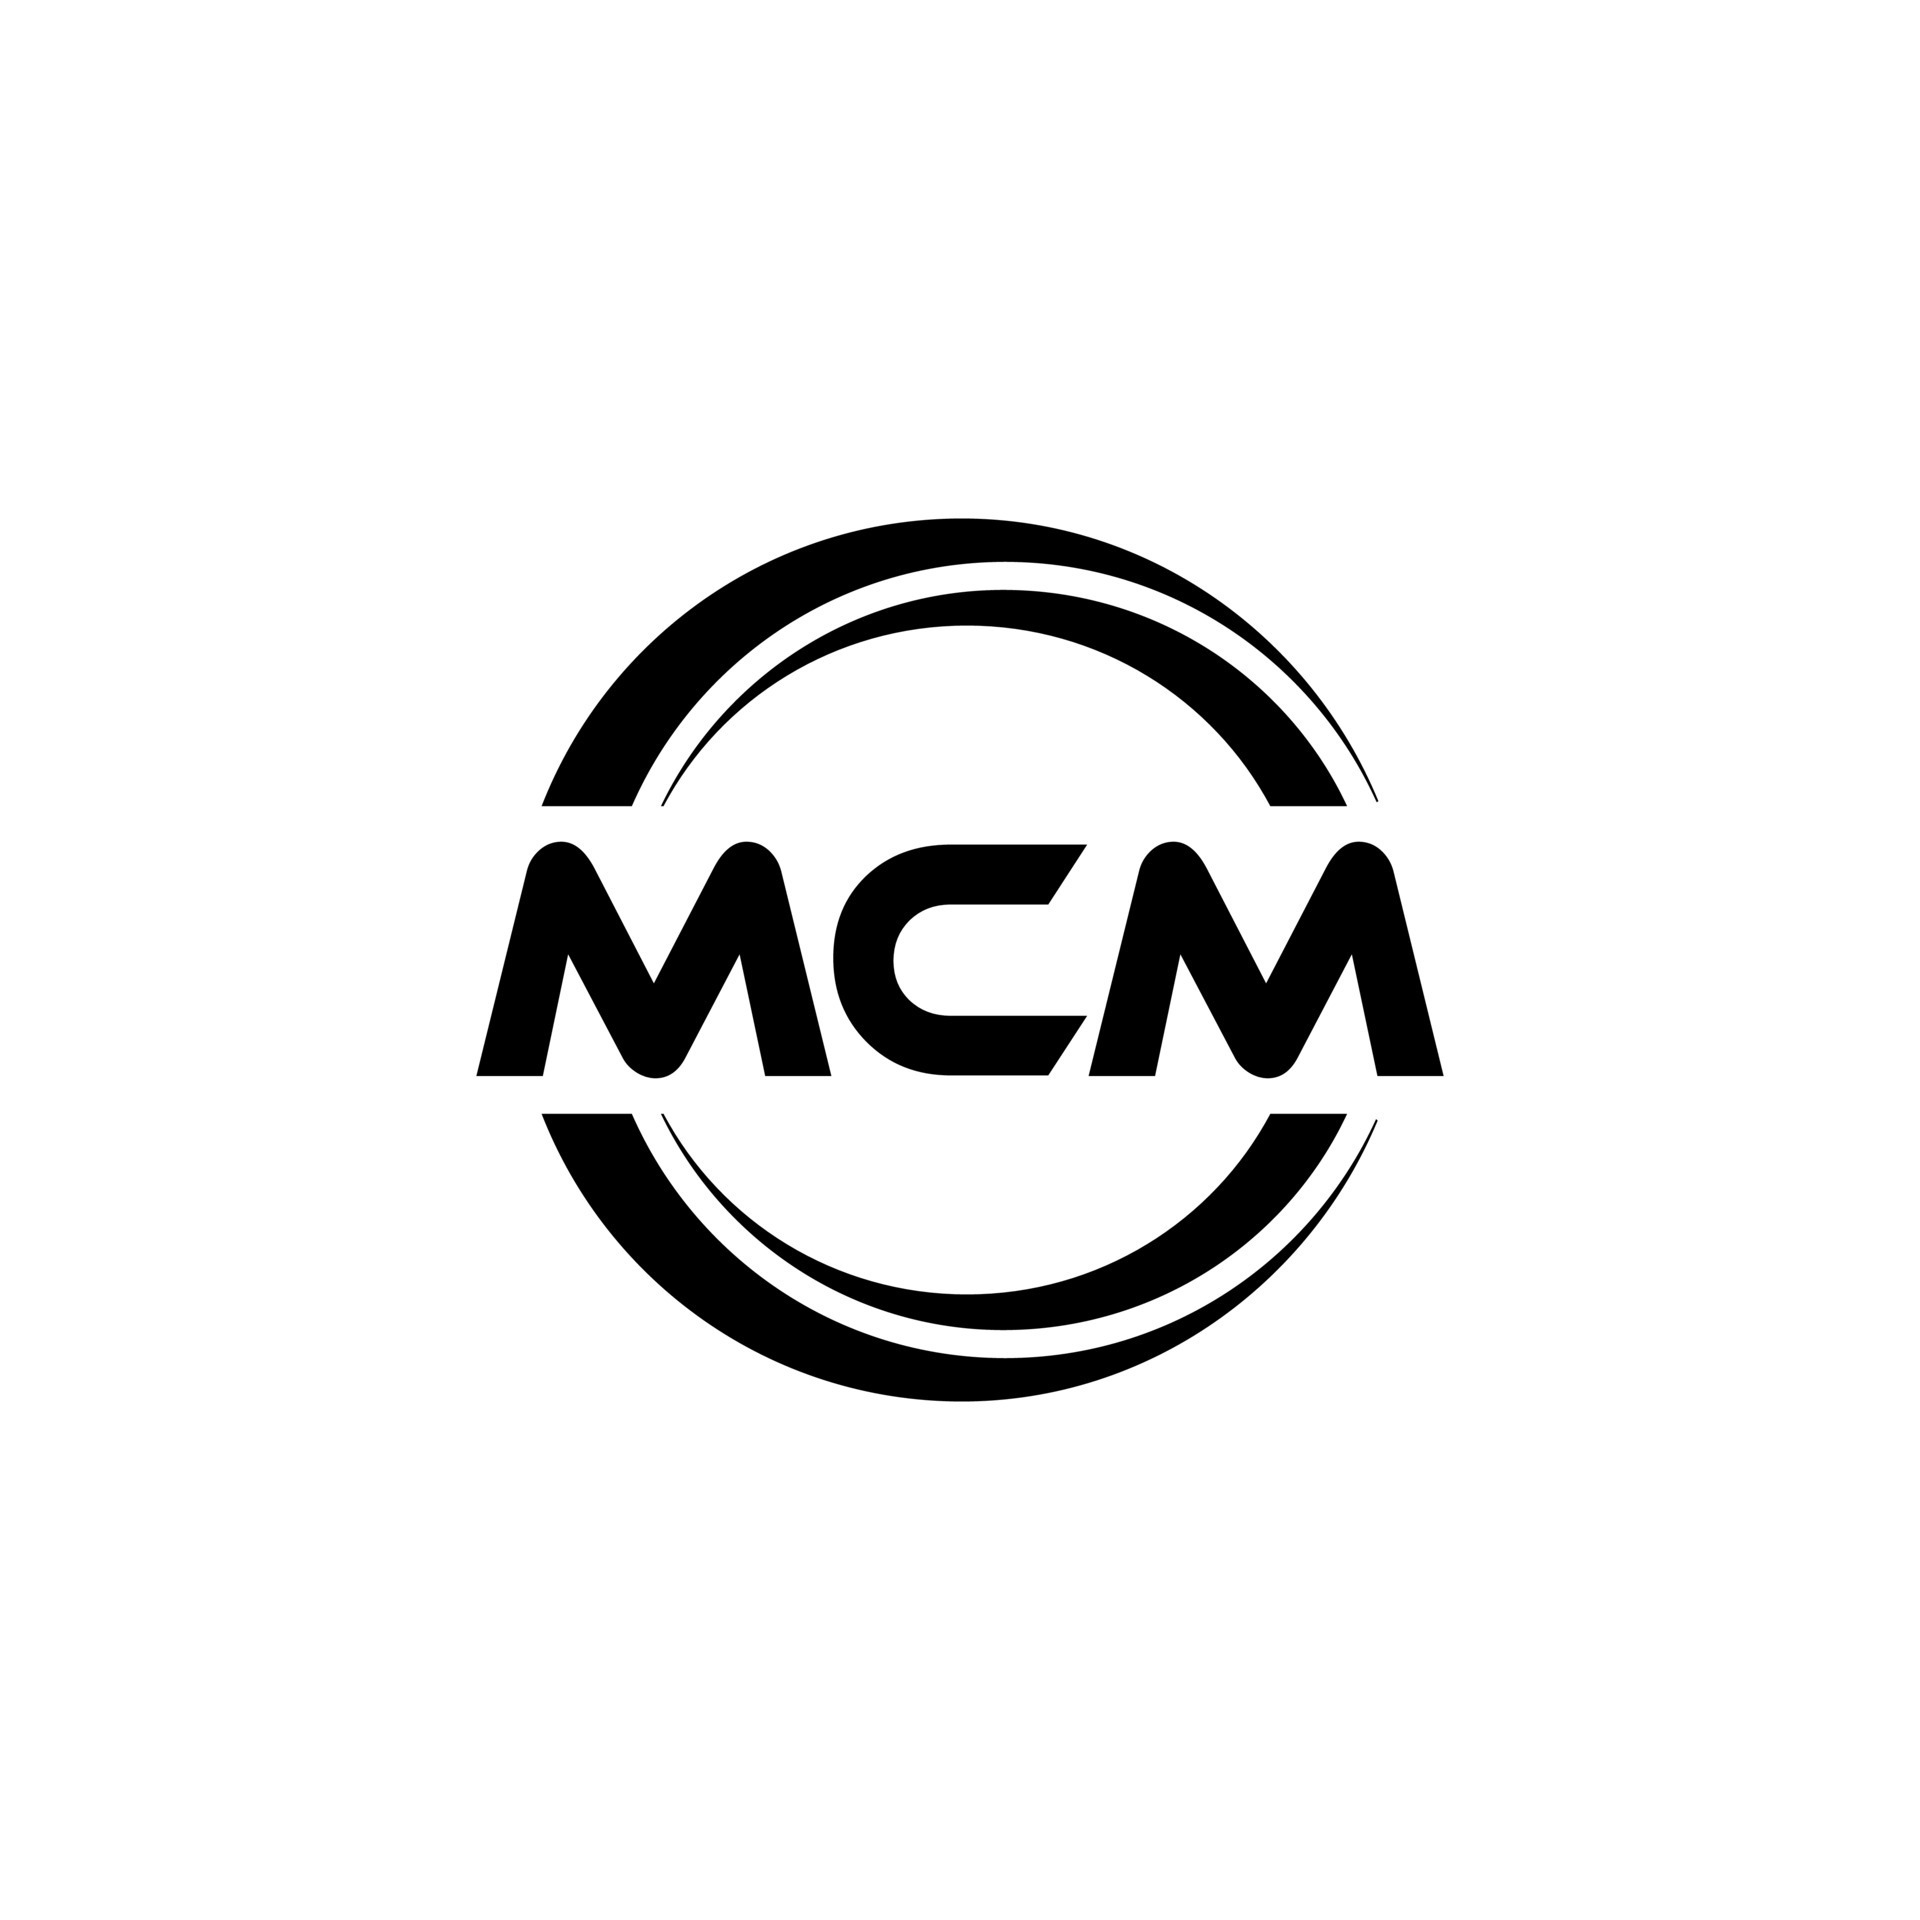 MCM letter logo design in illustration. Vector logo, calligraphy ...